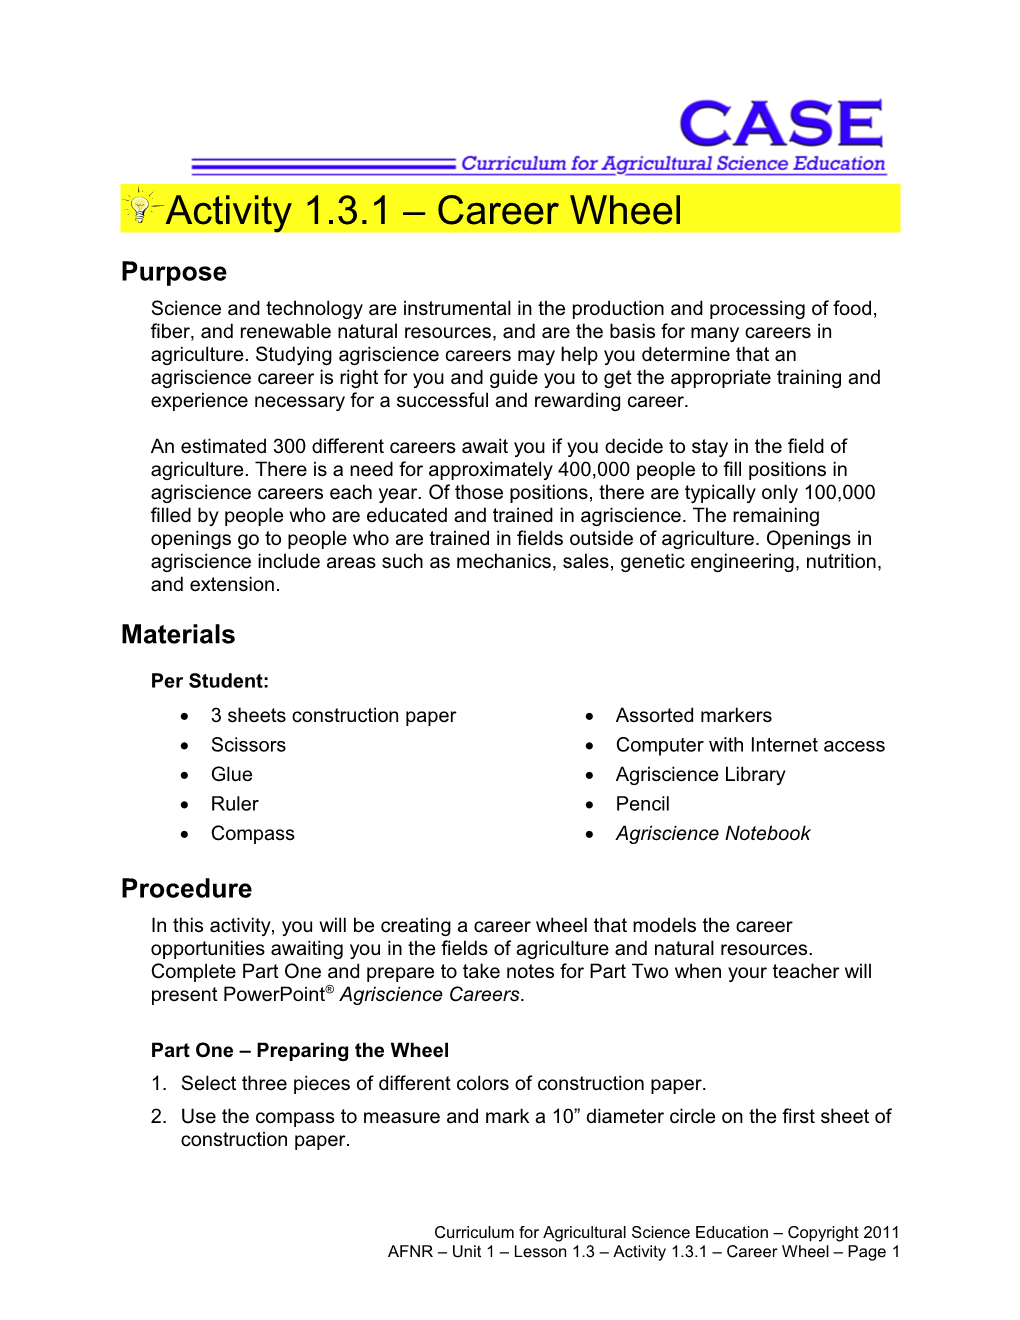 Activity 1.3.1 Career Wheel